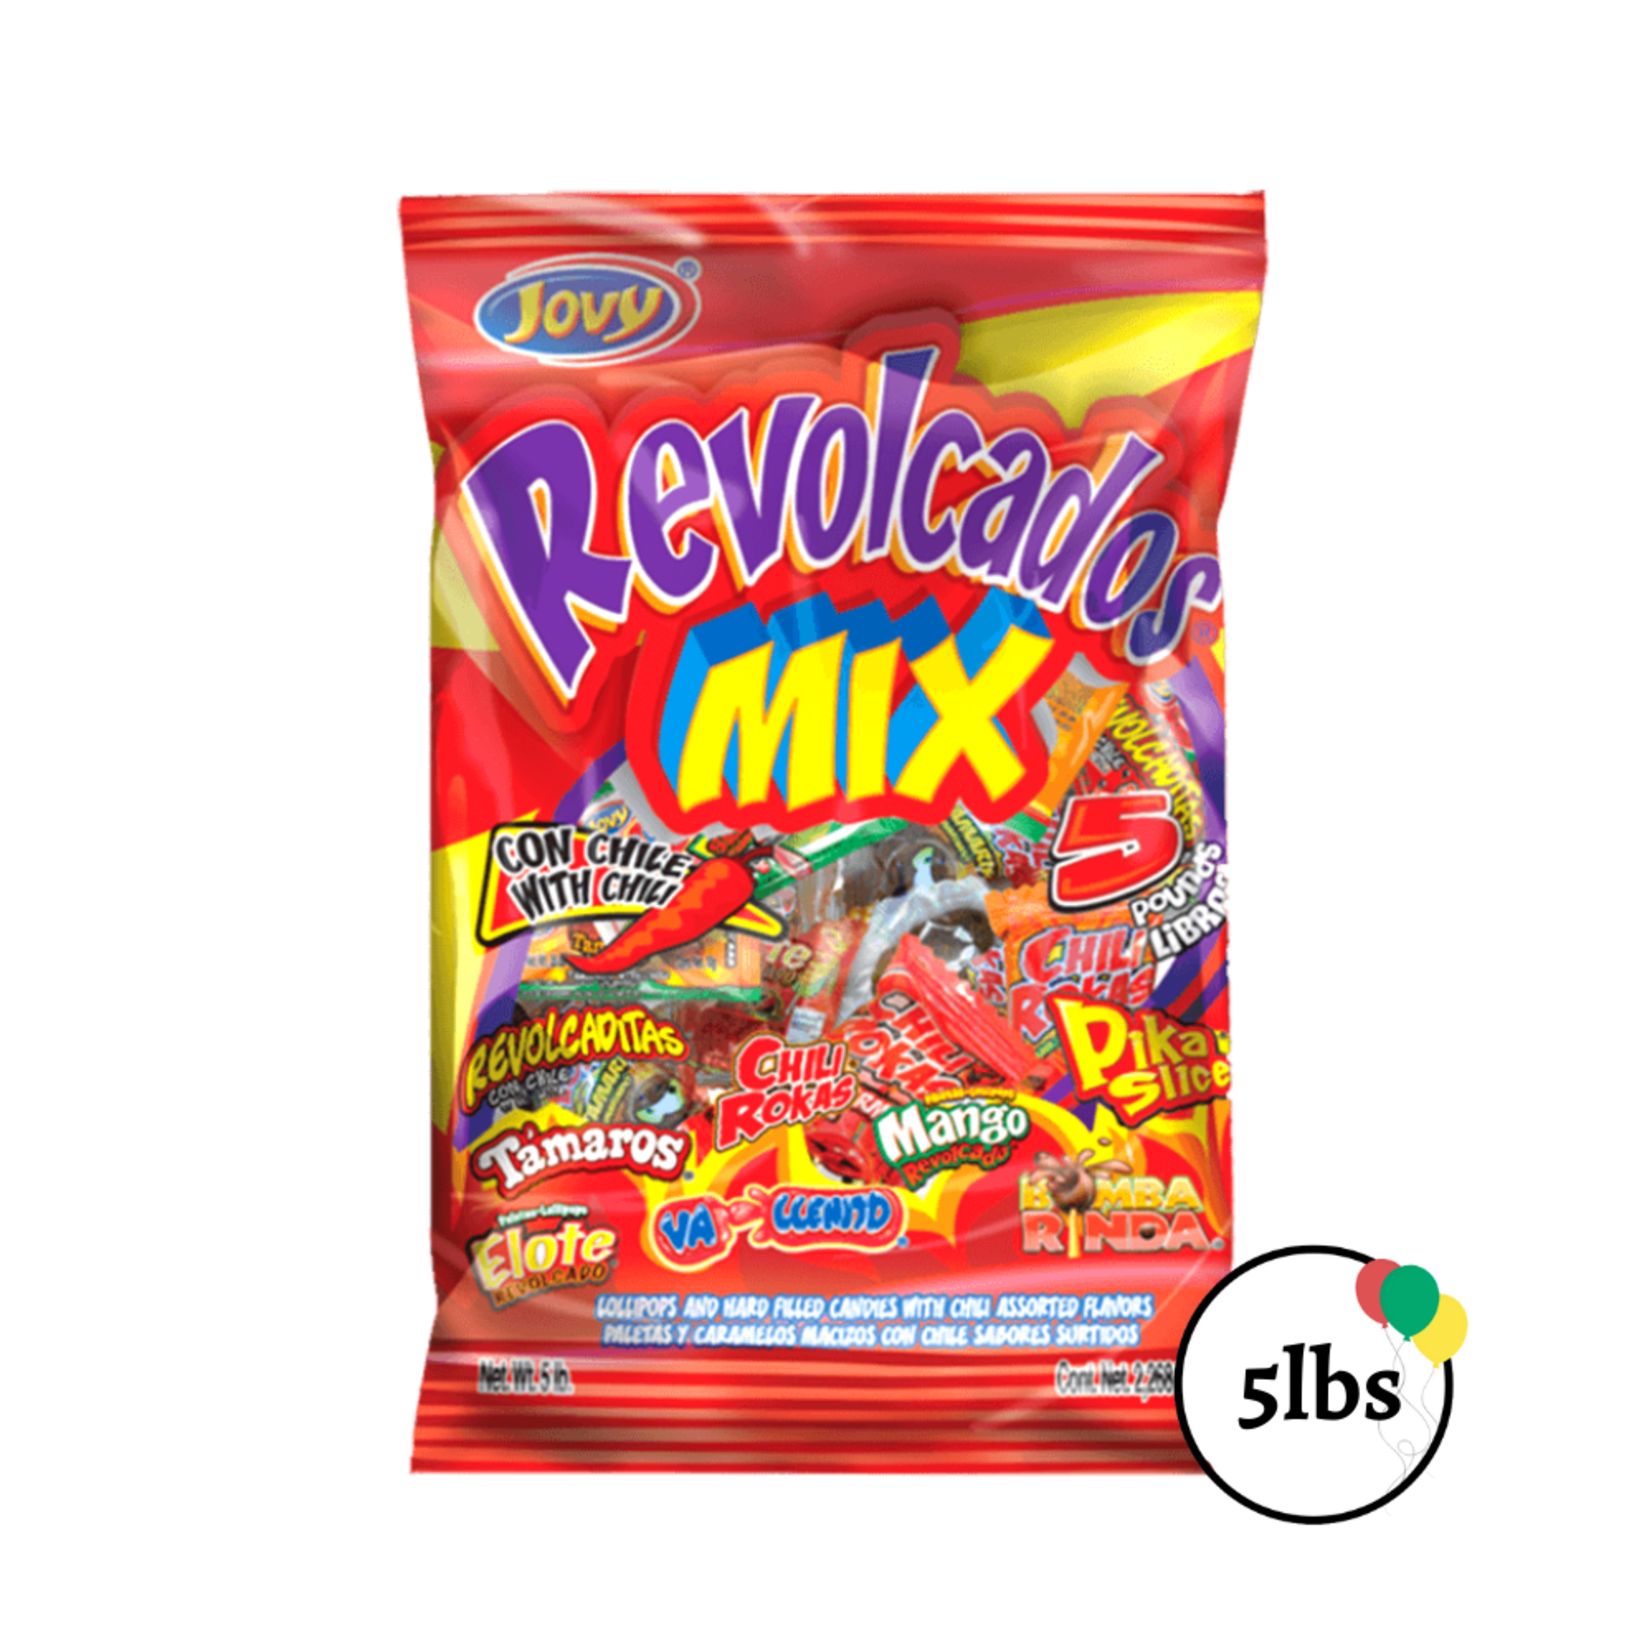 Jovy Revolcados Mix 5lbs